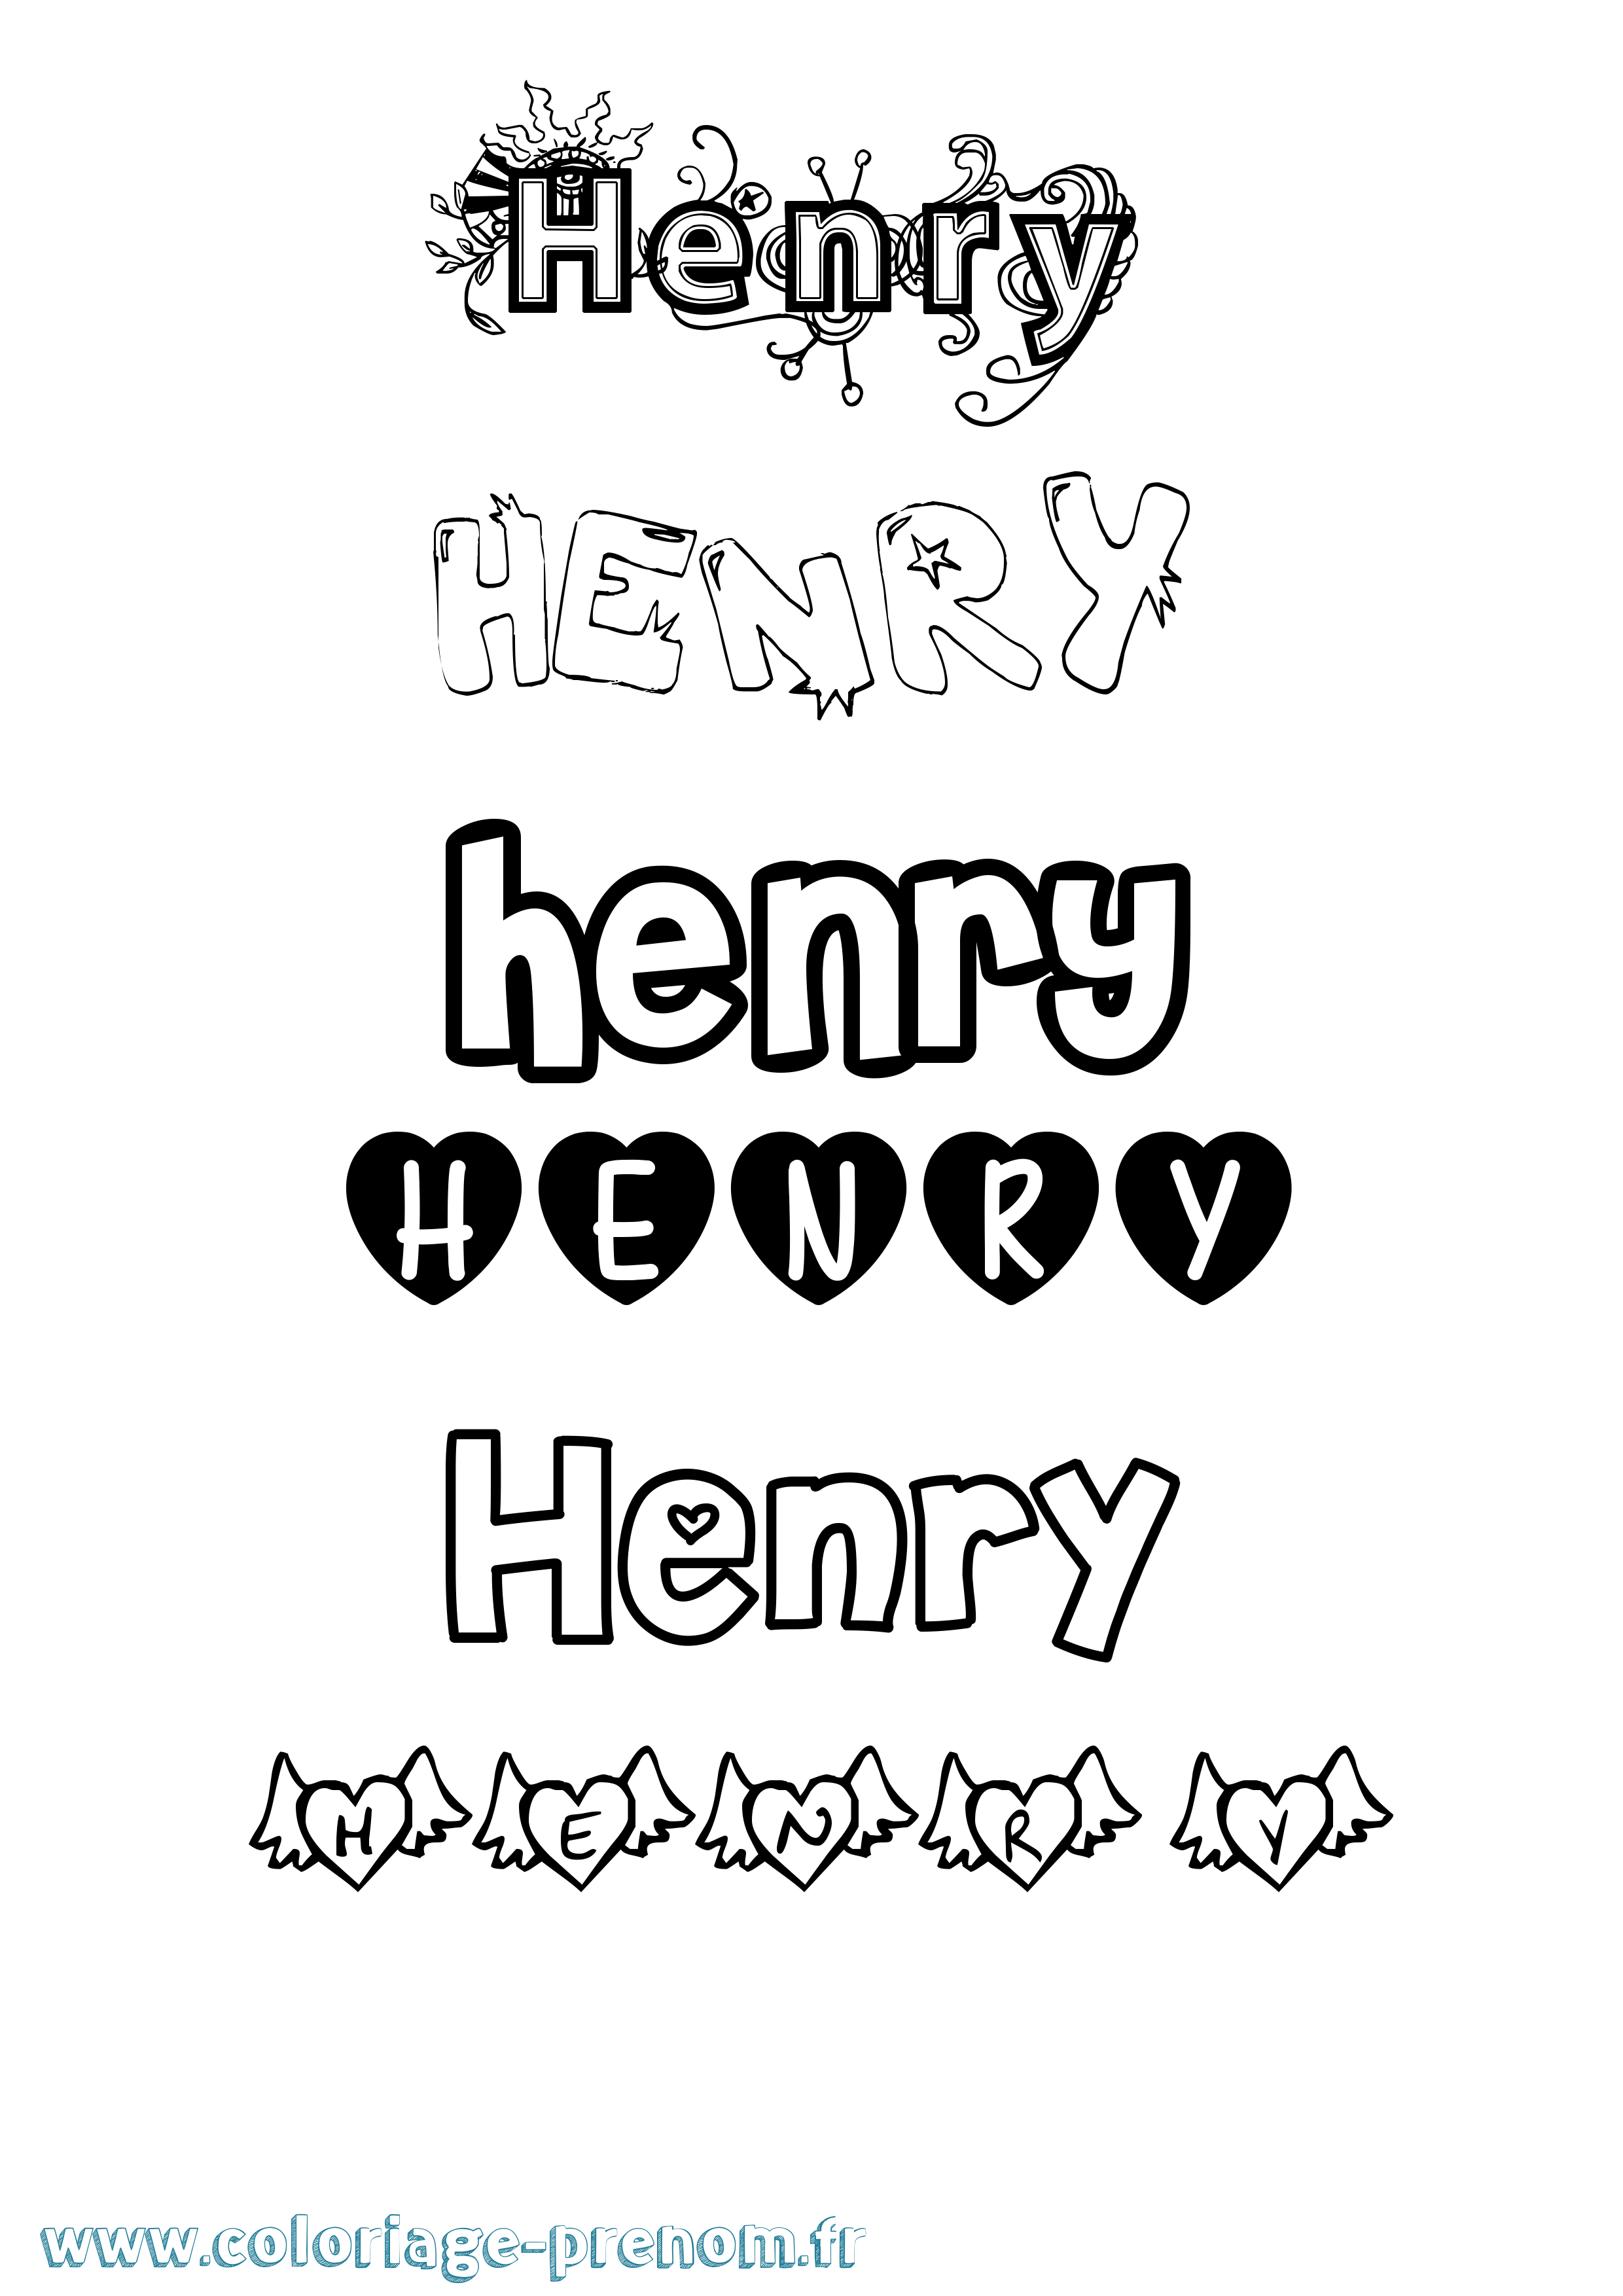 Coloriage prénom Henry